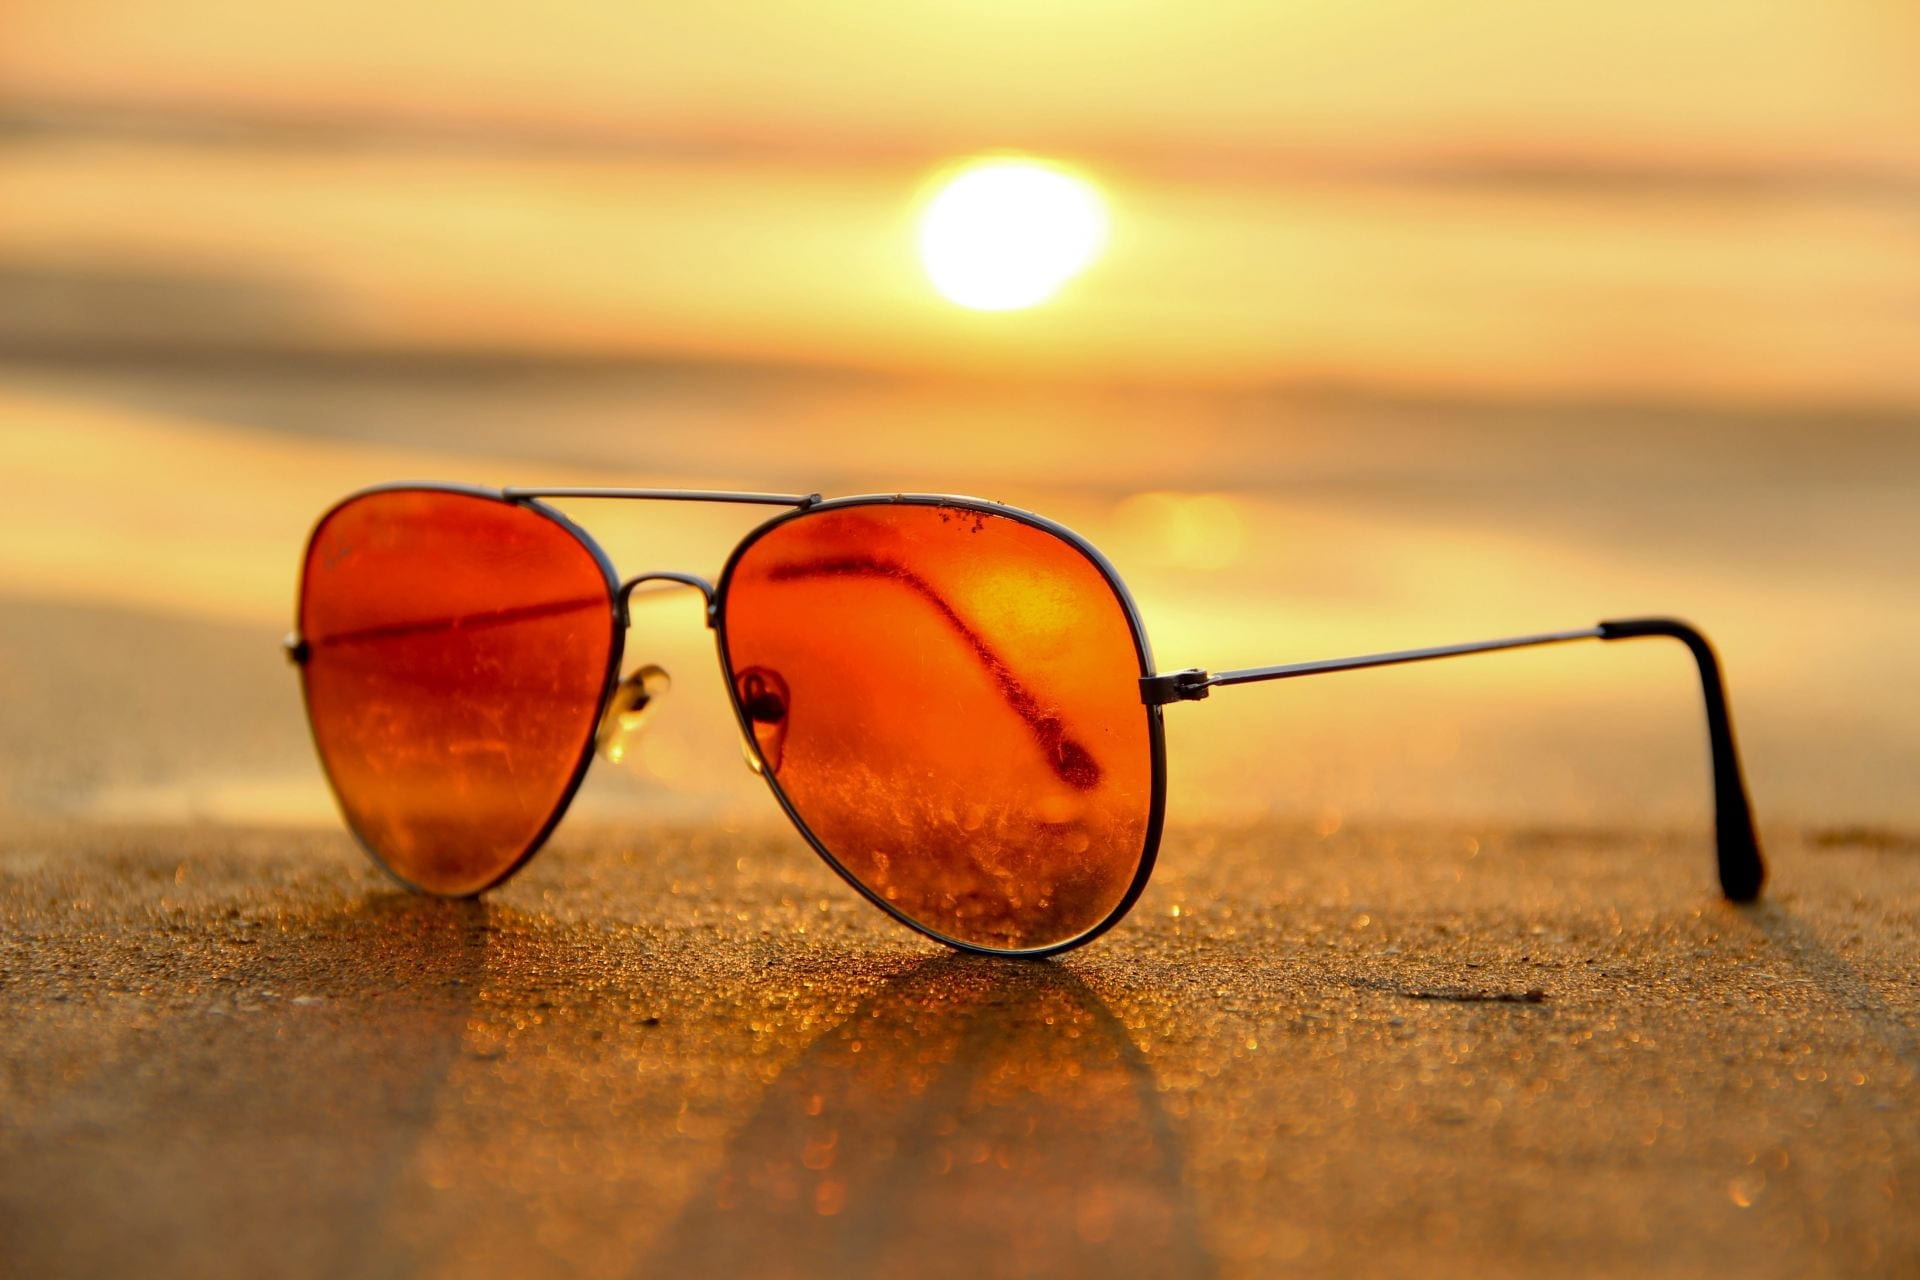 sunglasses on a beach at sunset